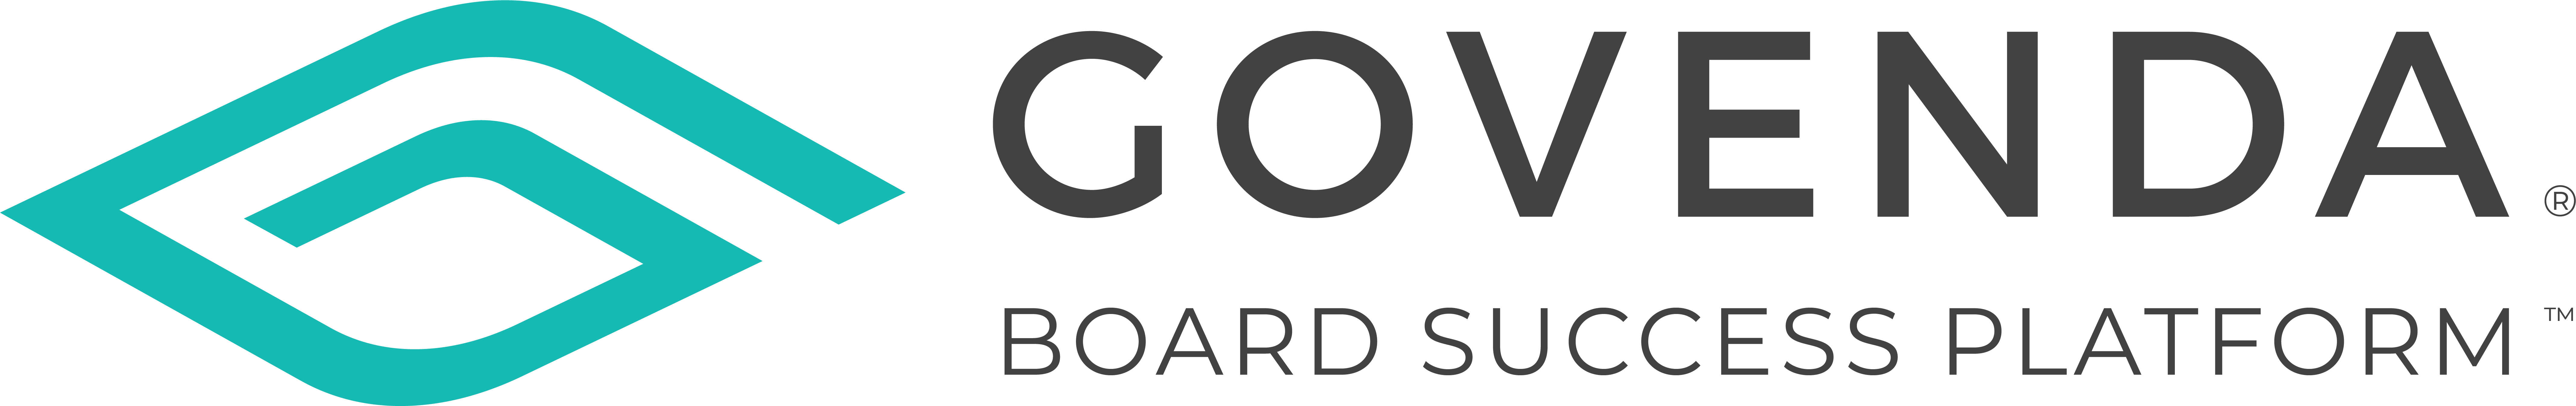 Govenda - Board Success Platform - Trim